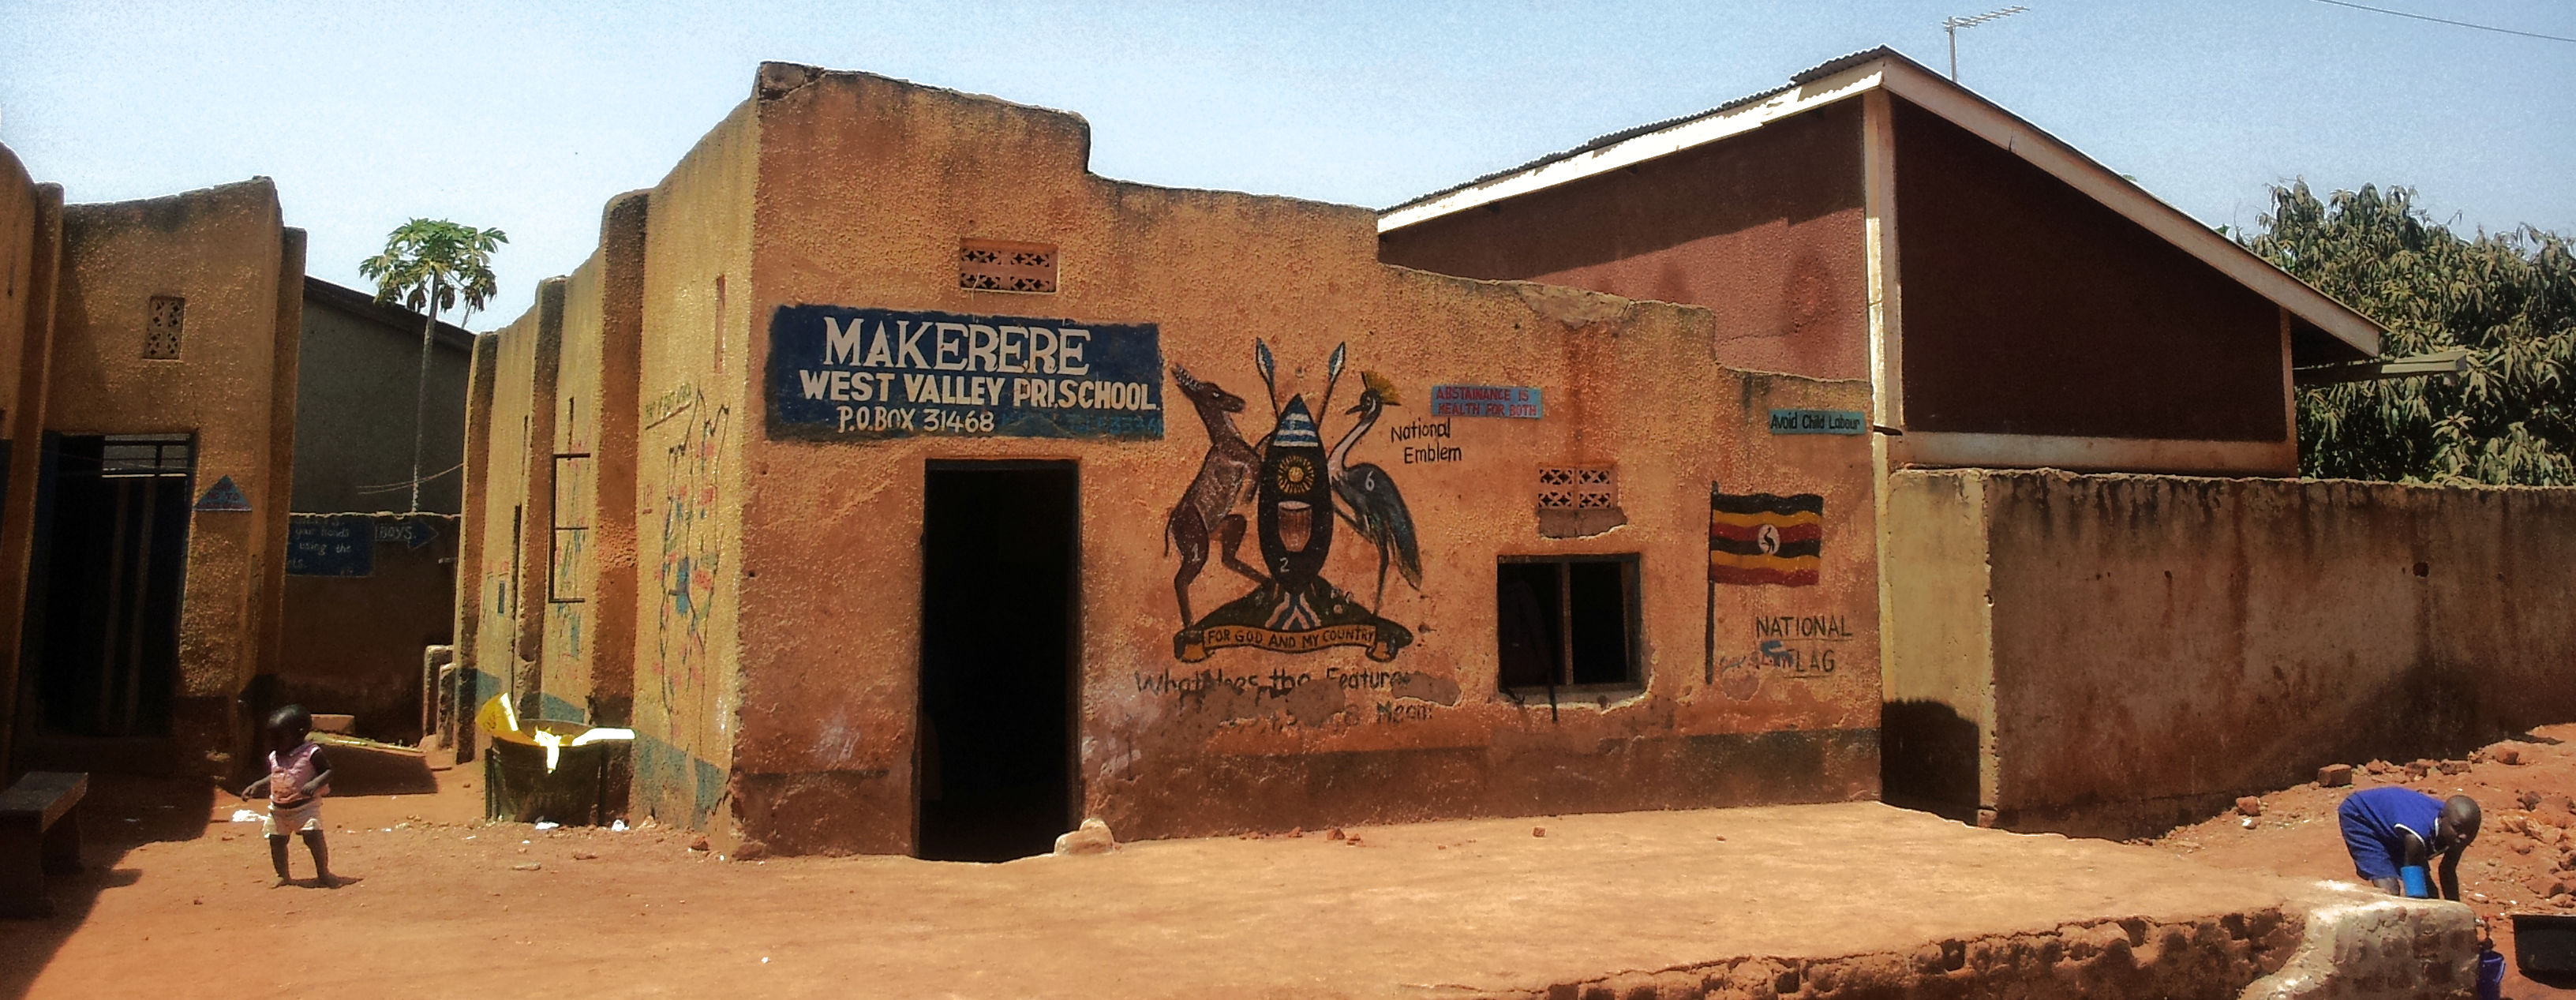 Makerere west valley primary school header